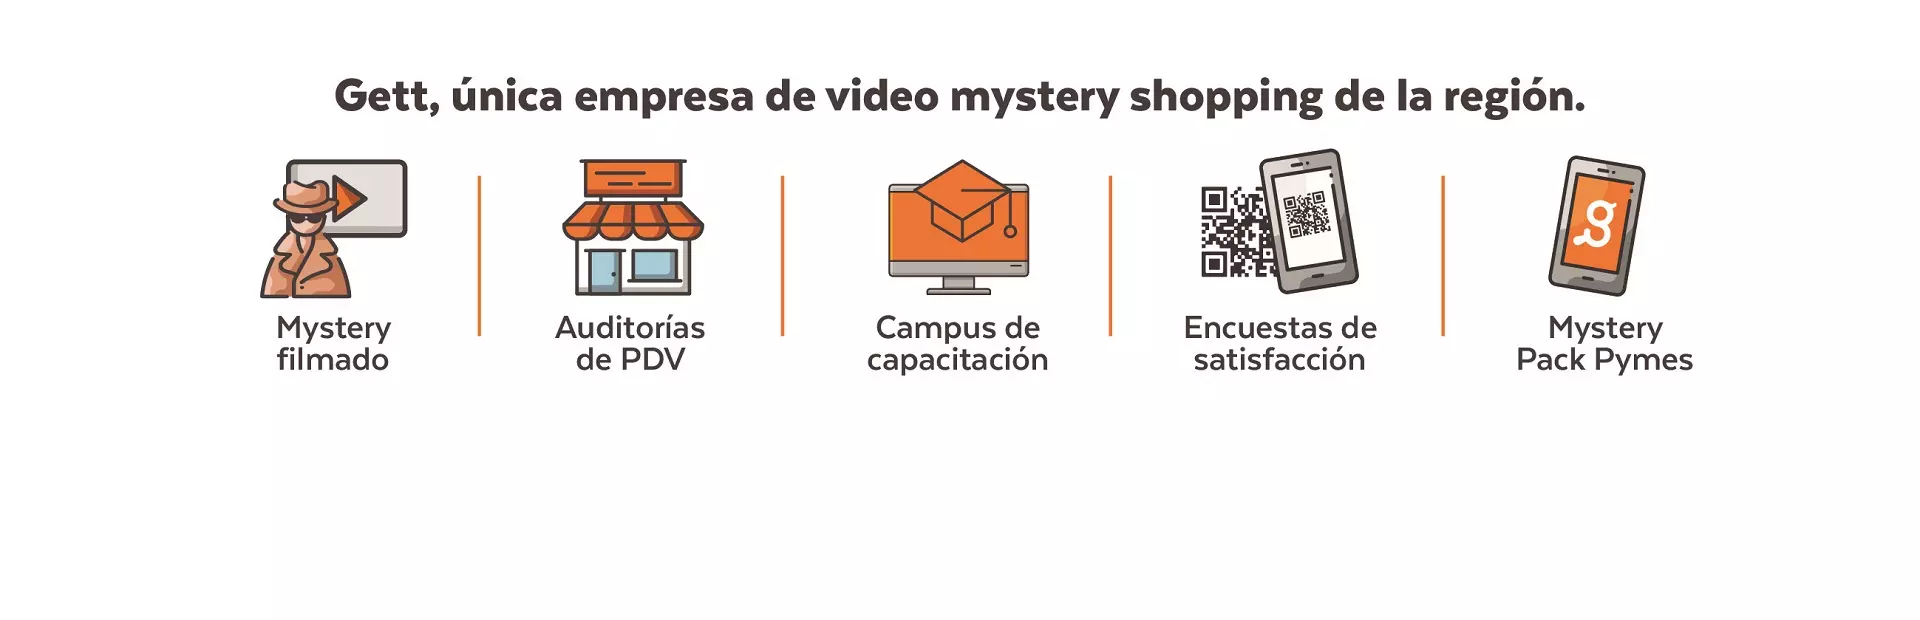 Gett - Video Mystery Shopping